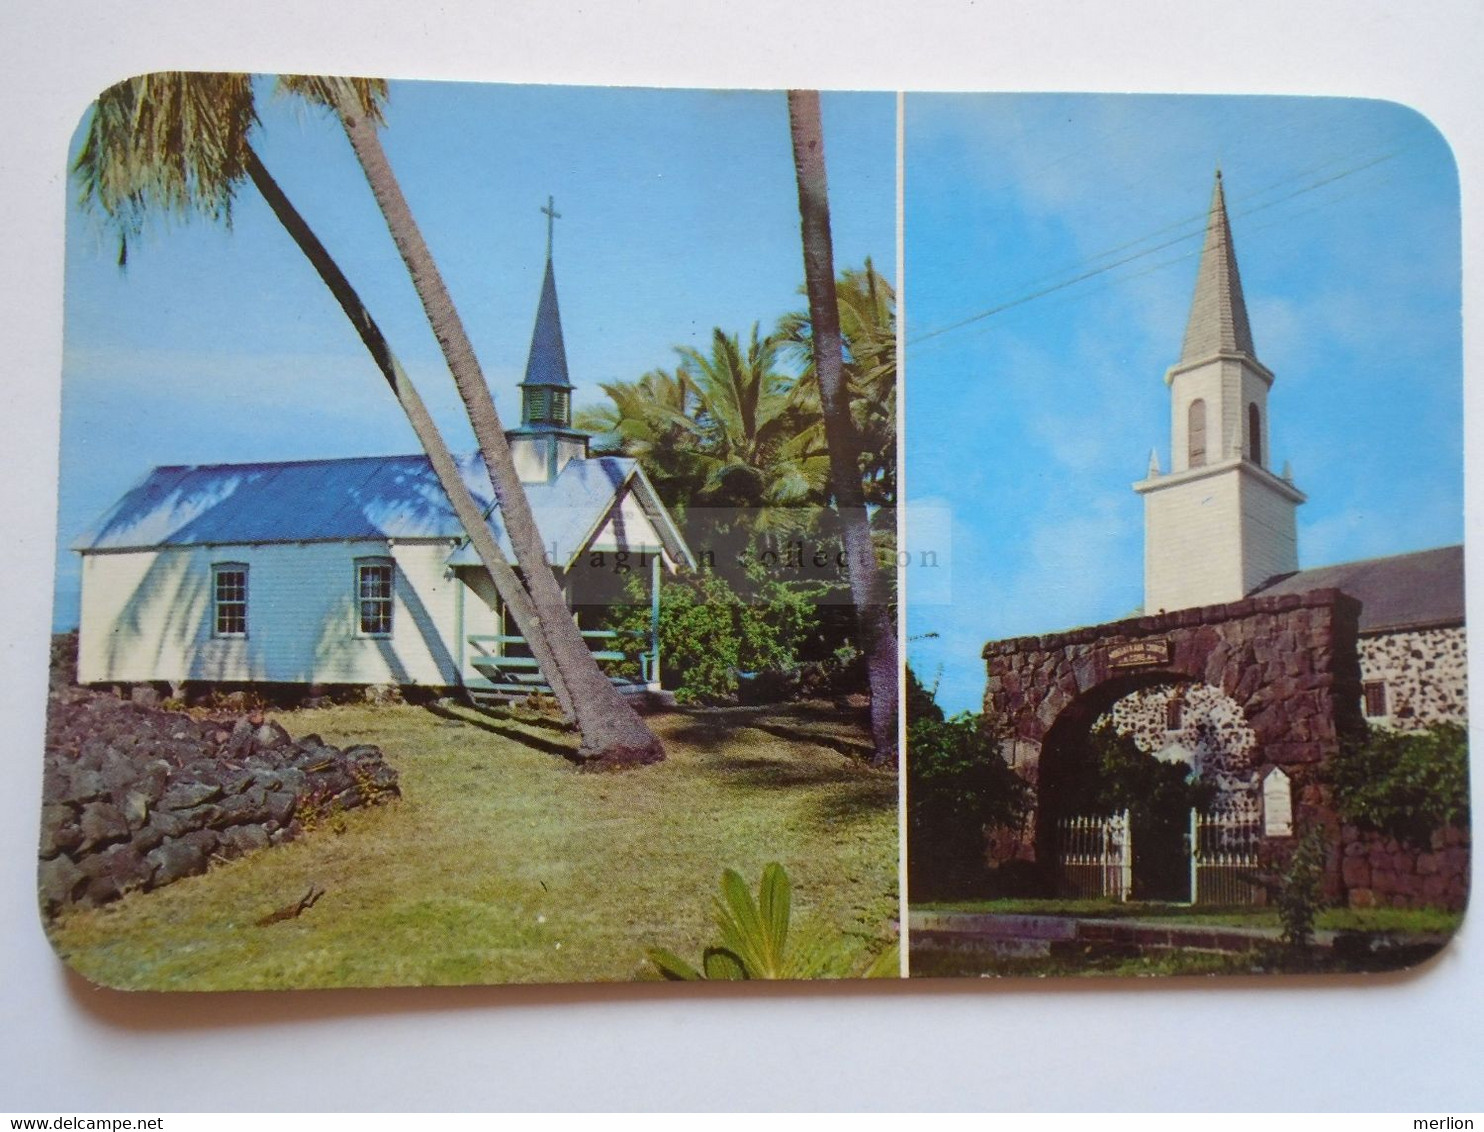 D174886  HAWAII  Churches Of KONA  St. Peter's By The Sea  Mokuai-Kaua  In Kailua-Kona   Hawaii - Big Island Of Hawaii